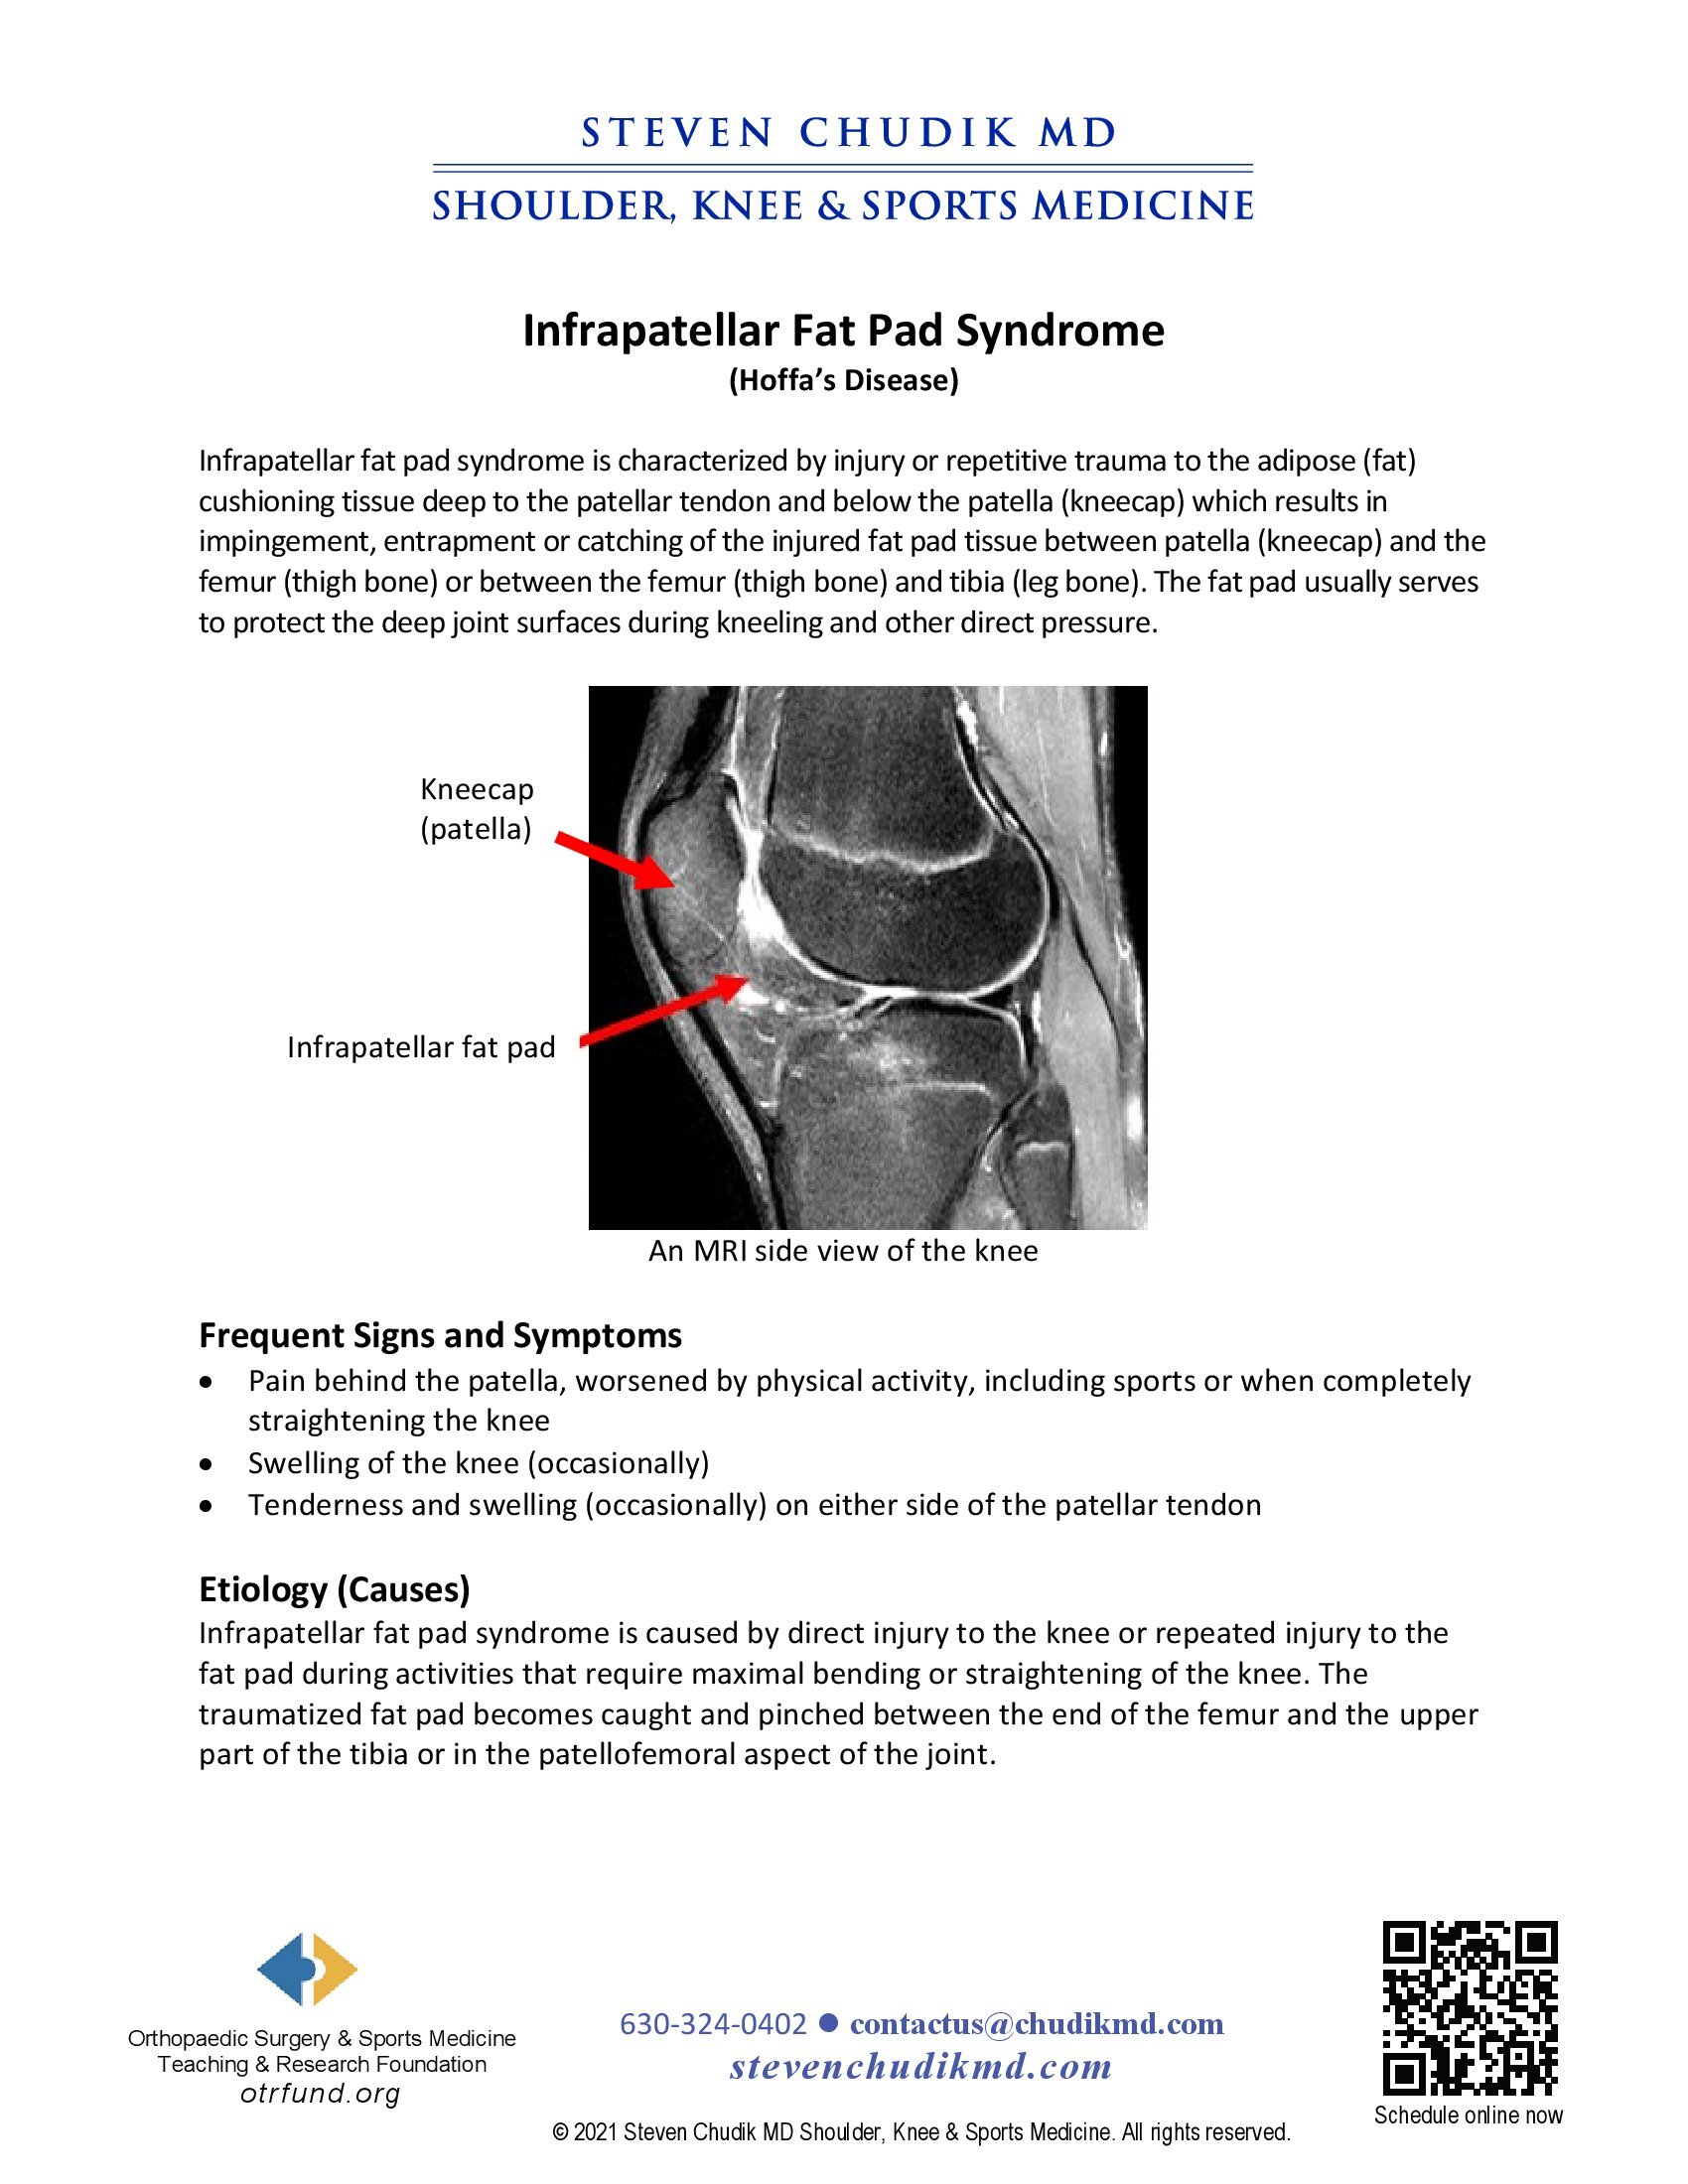 Infrapatellar Fat Pad Syndrome - Steven Chudik MD